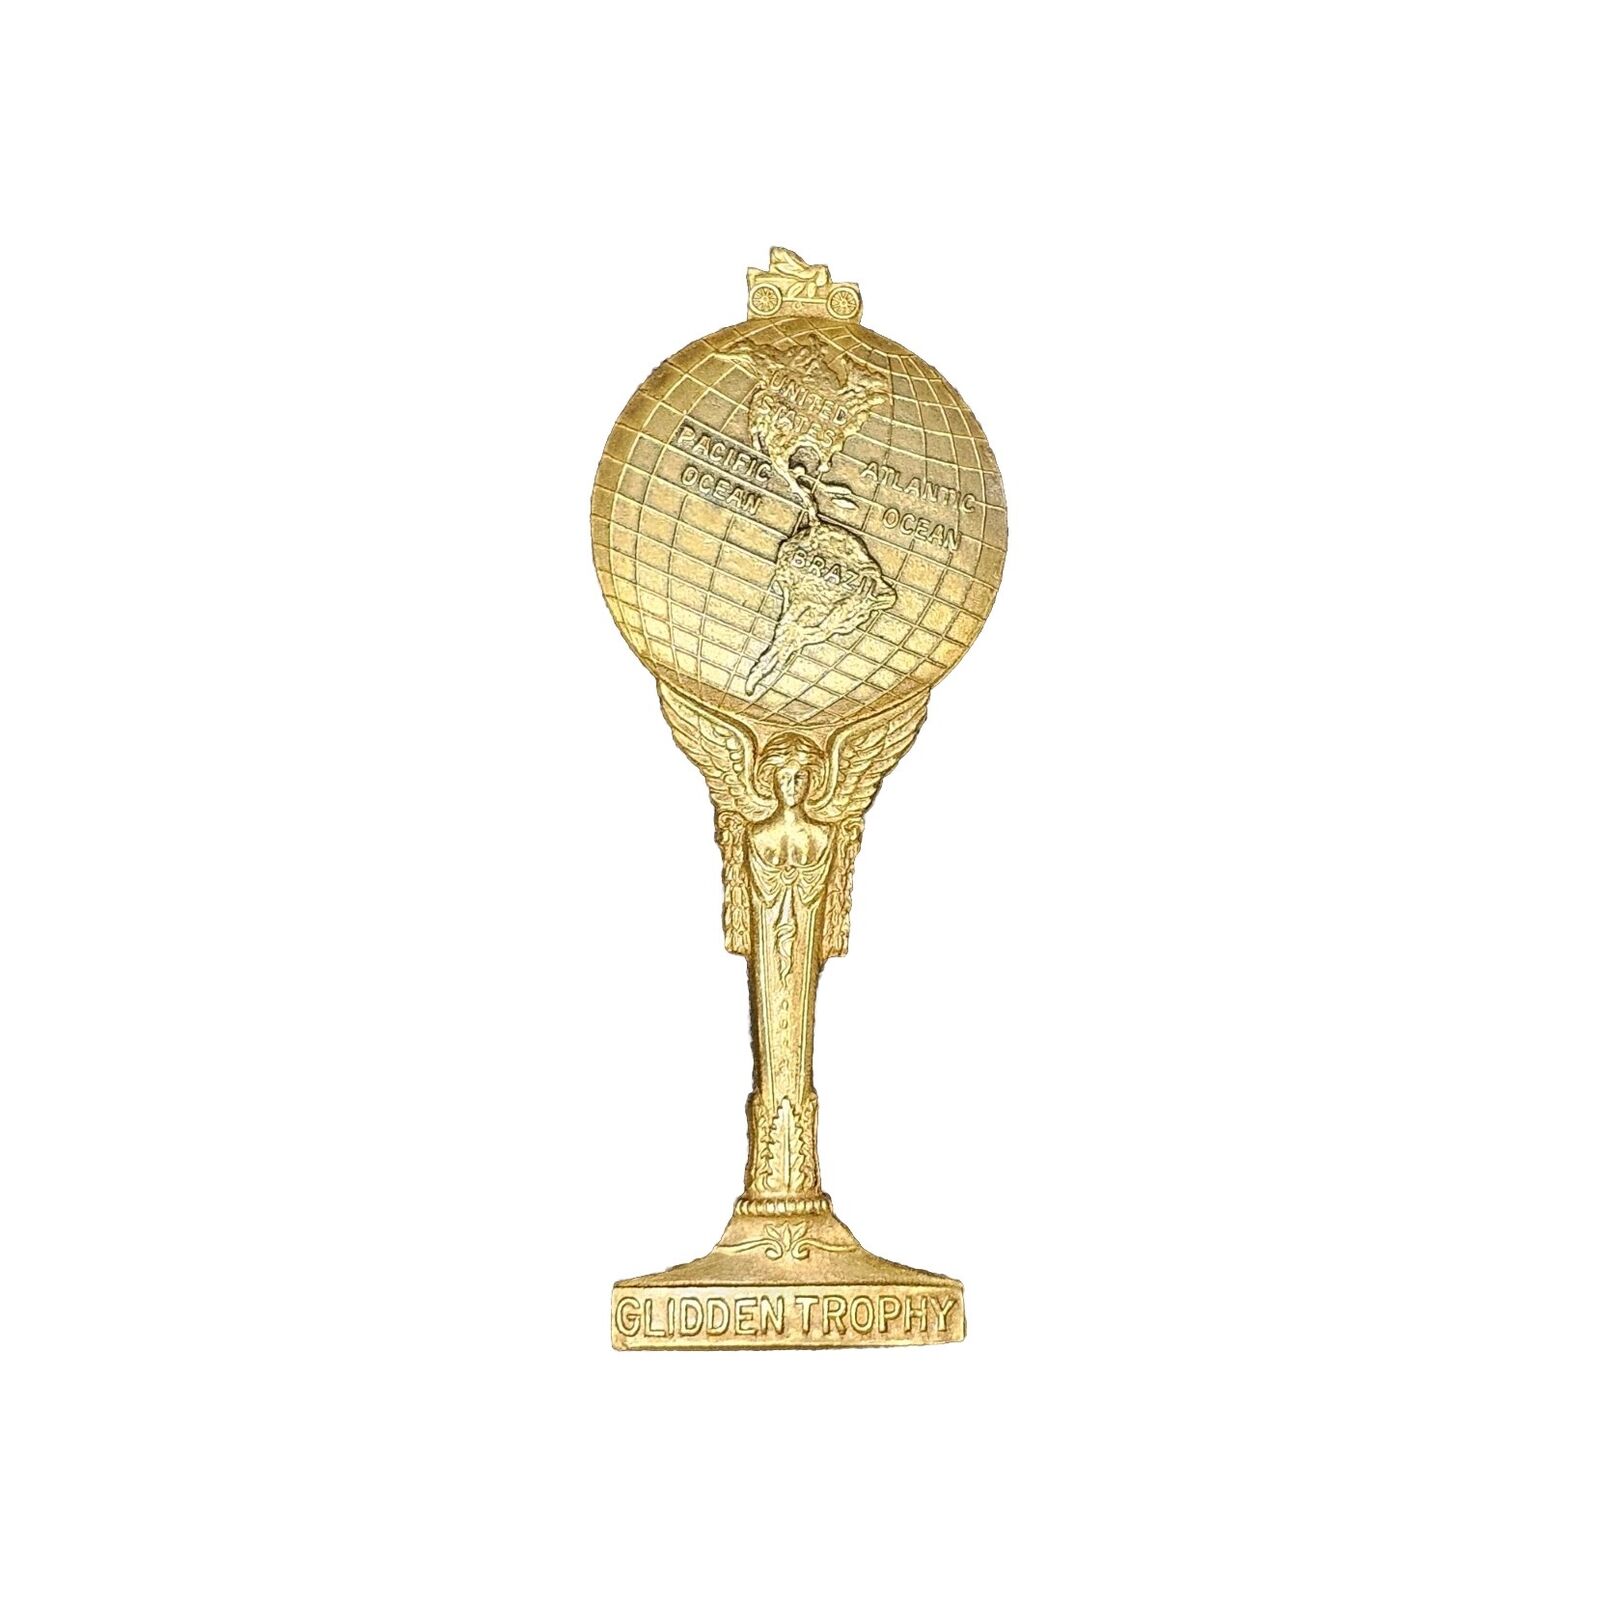 c.1910 Charles J. Glidden Trophy Brass Pinback Badge Pin Automobile Tour AAA